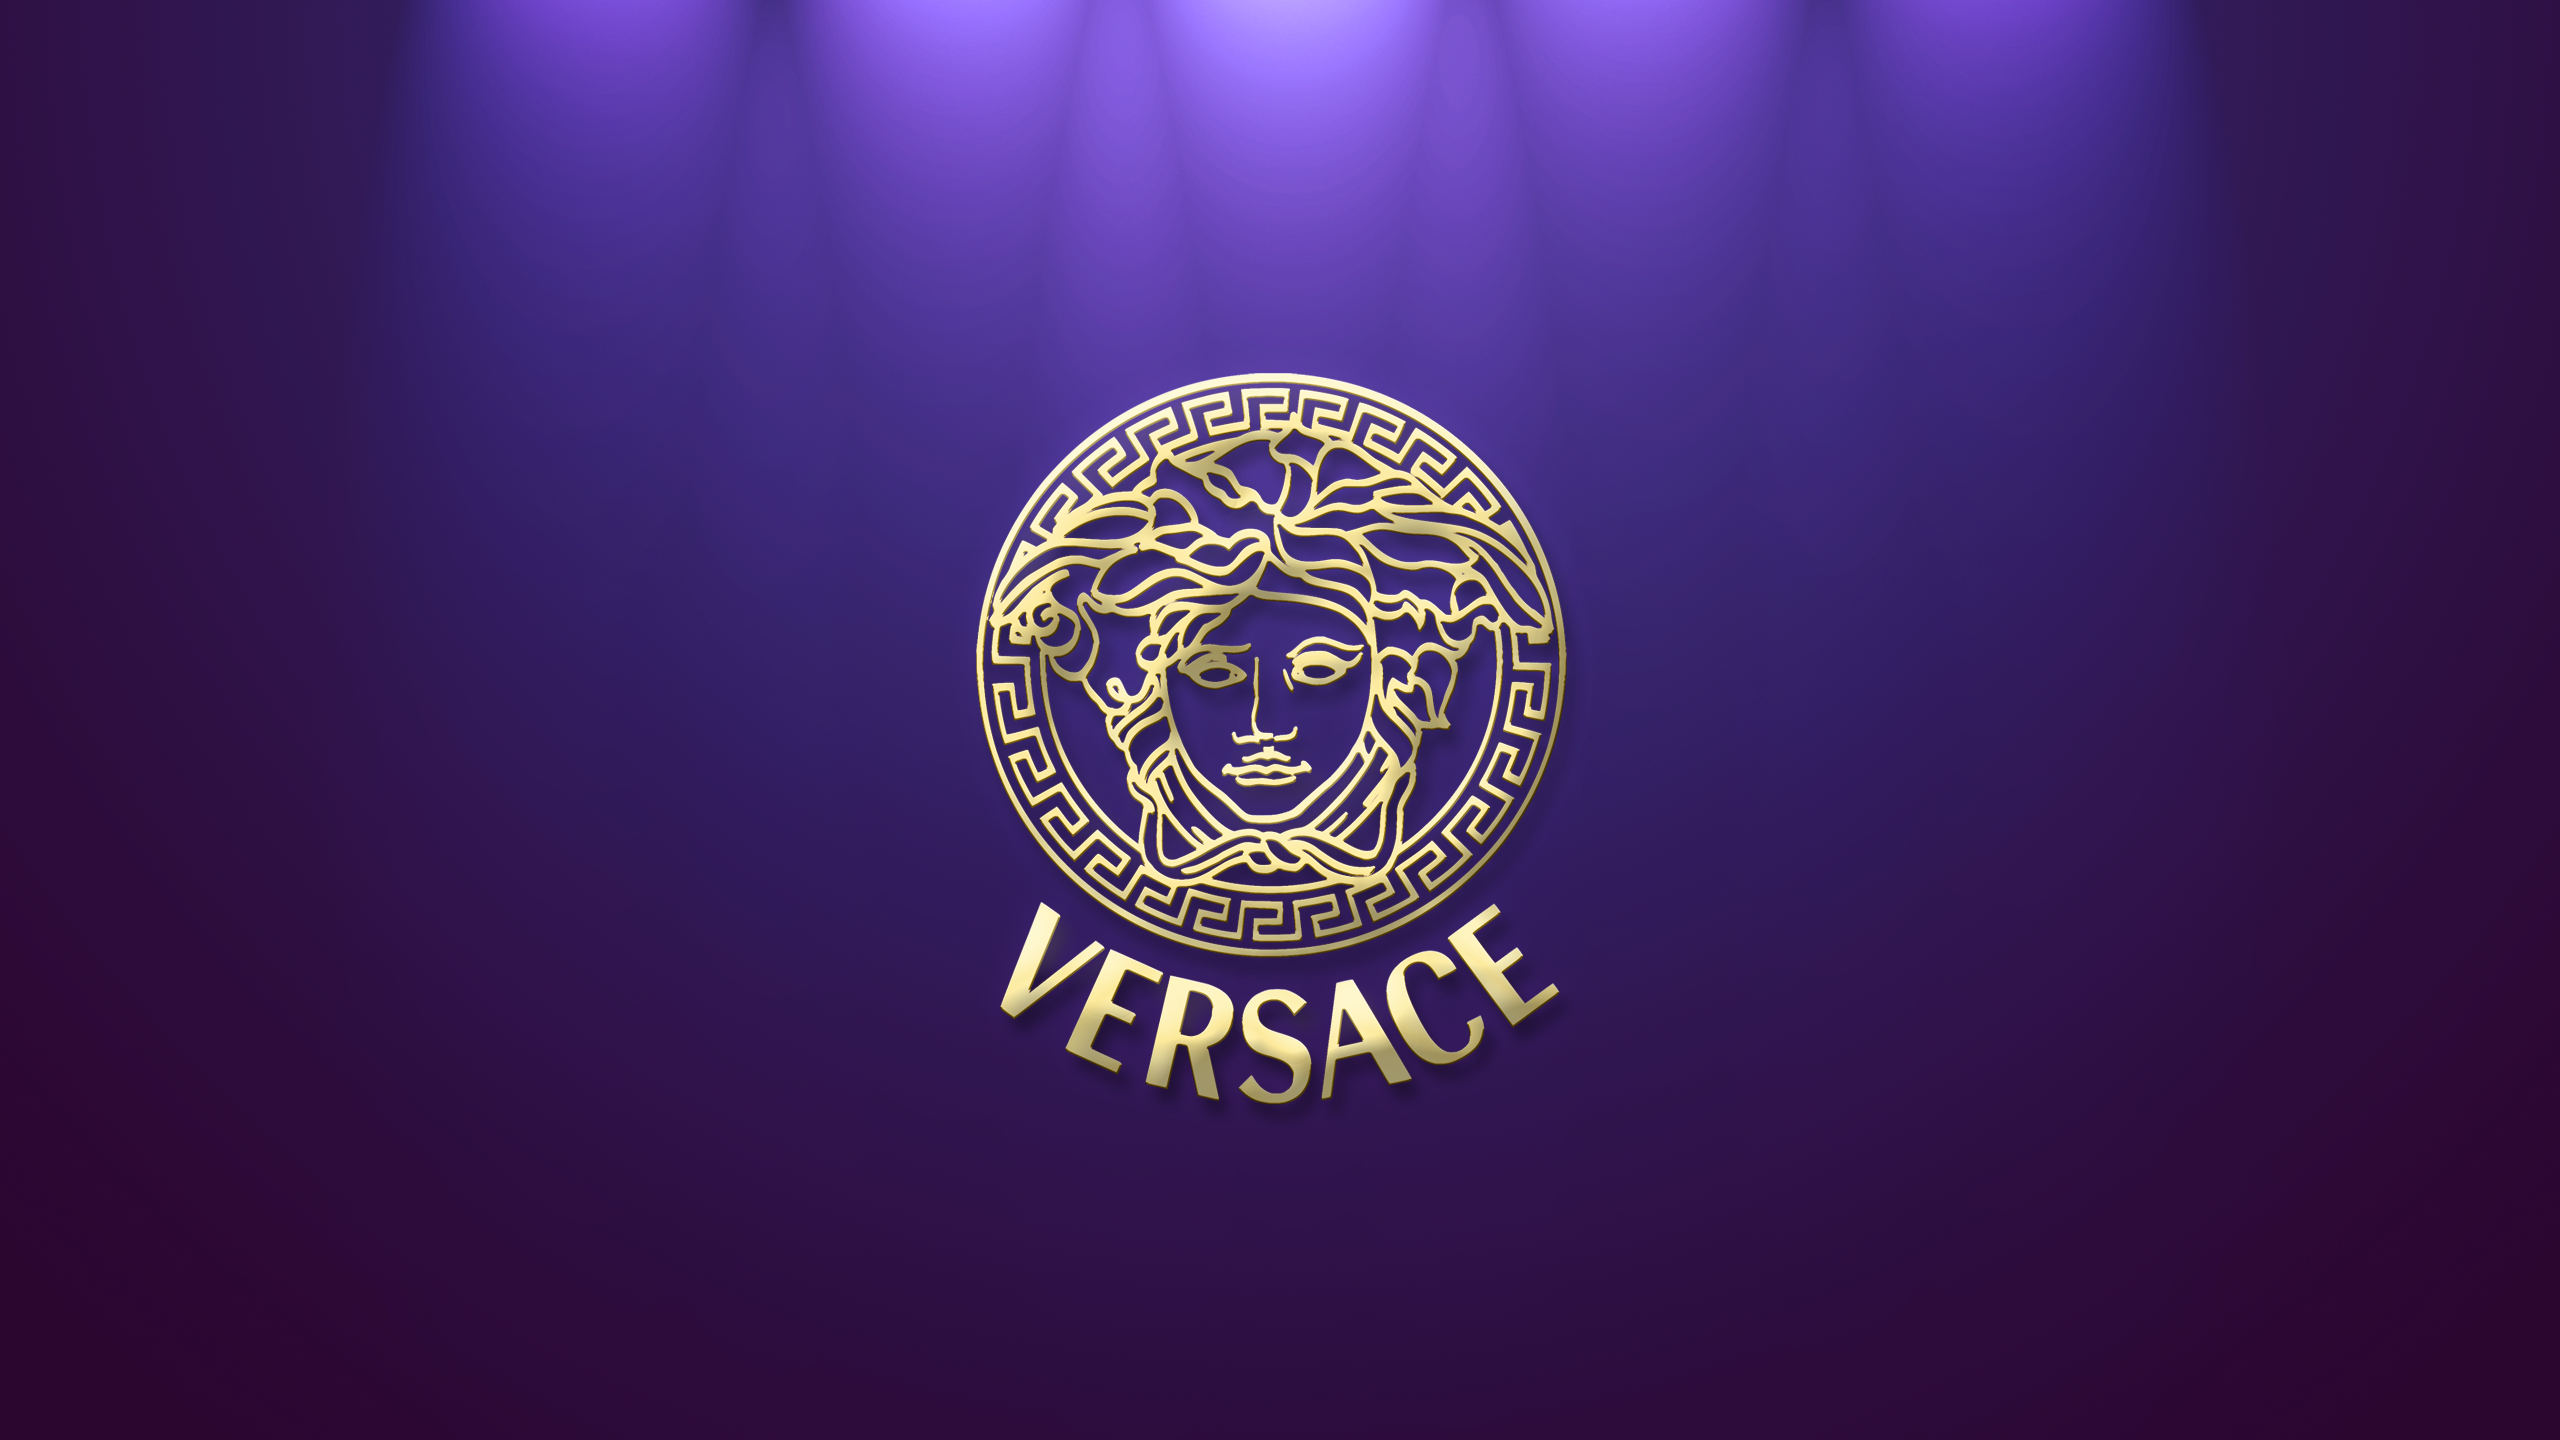 Versace Medusa Insignia by monkeymagico on DeviantArt